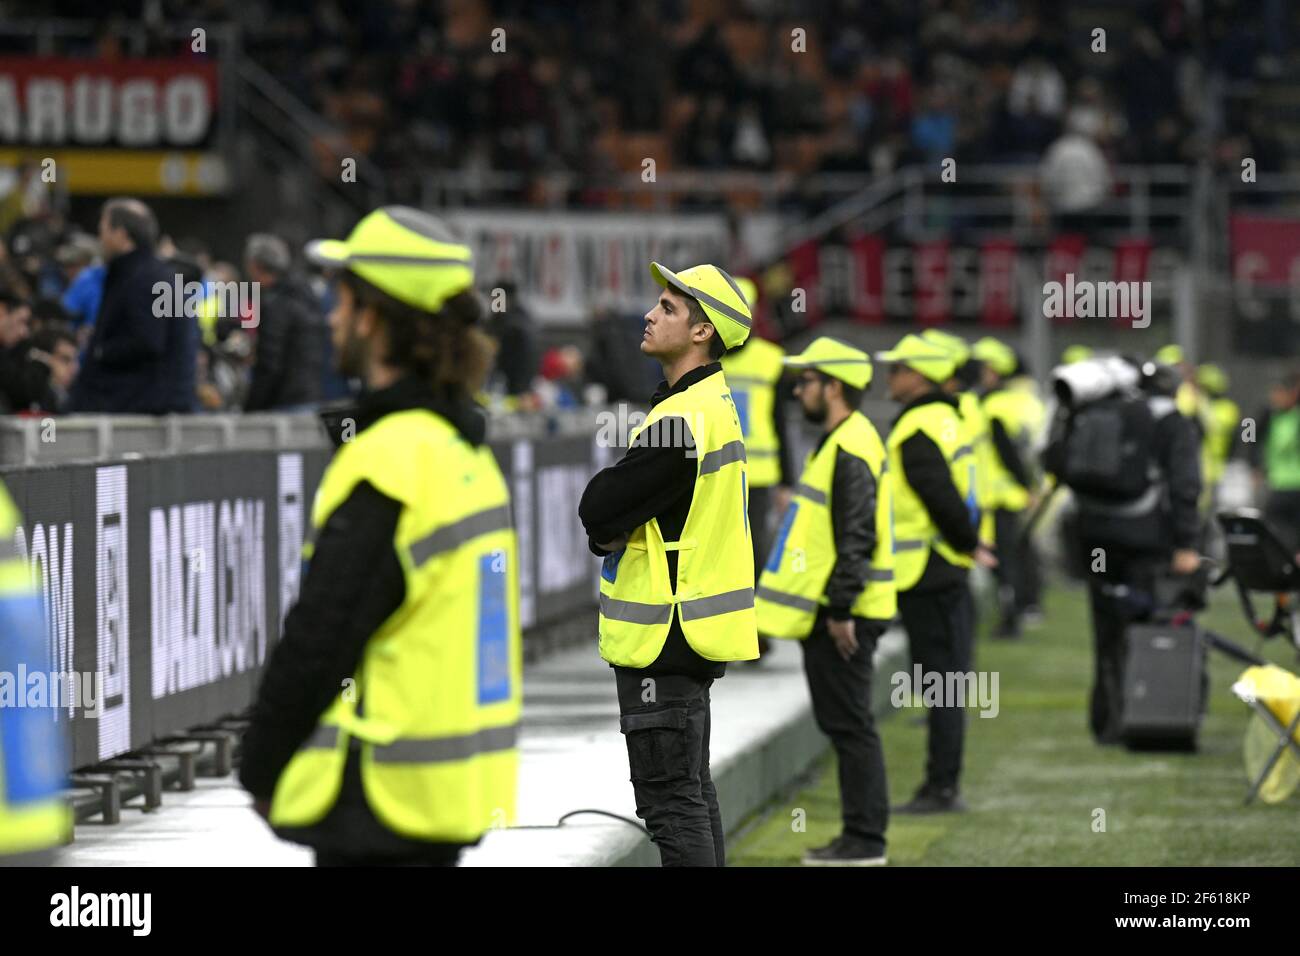 Security steward staff at the San Siro football stadium in Milan. Italy Stock Photo